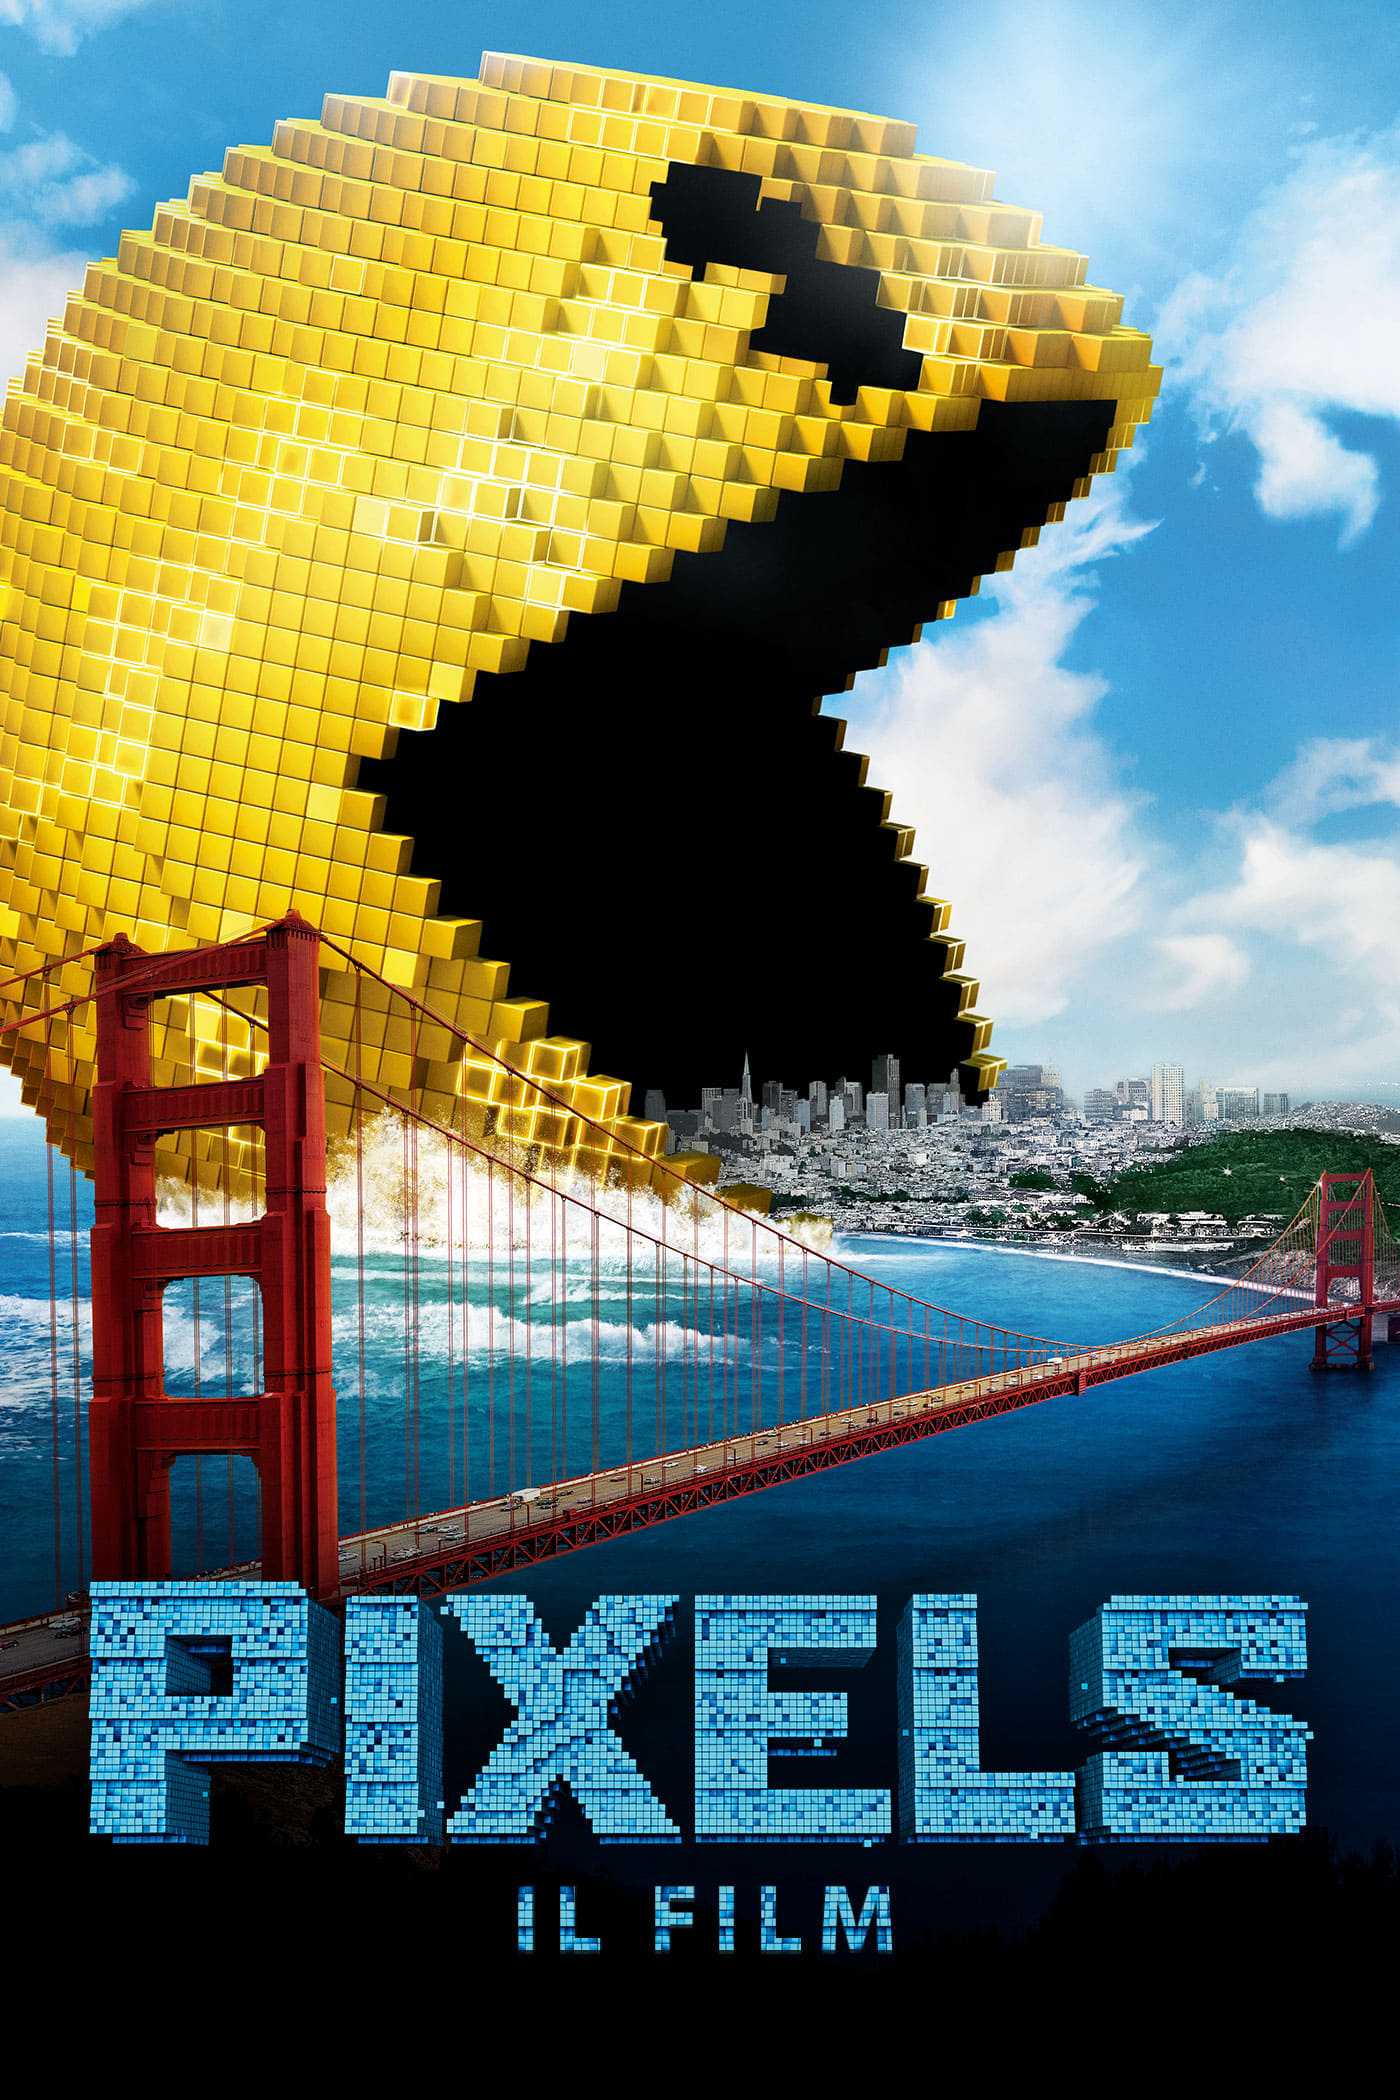 Pixels in streaming